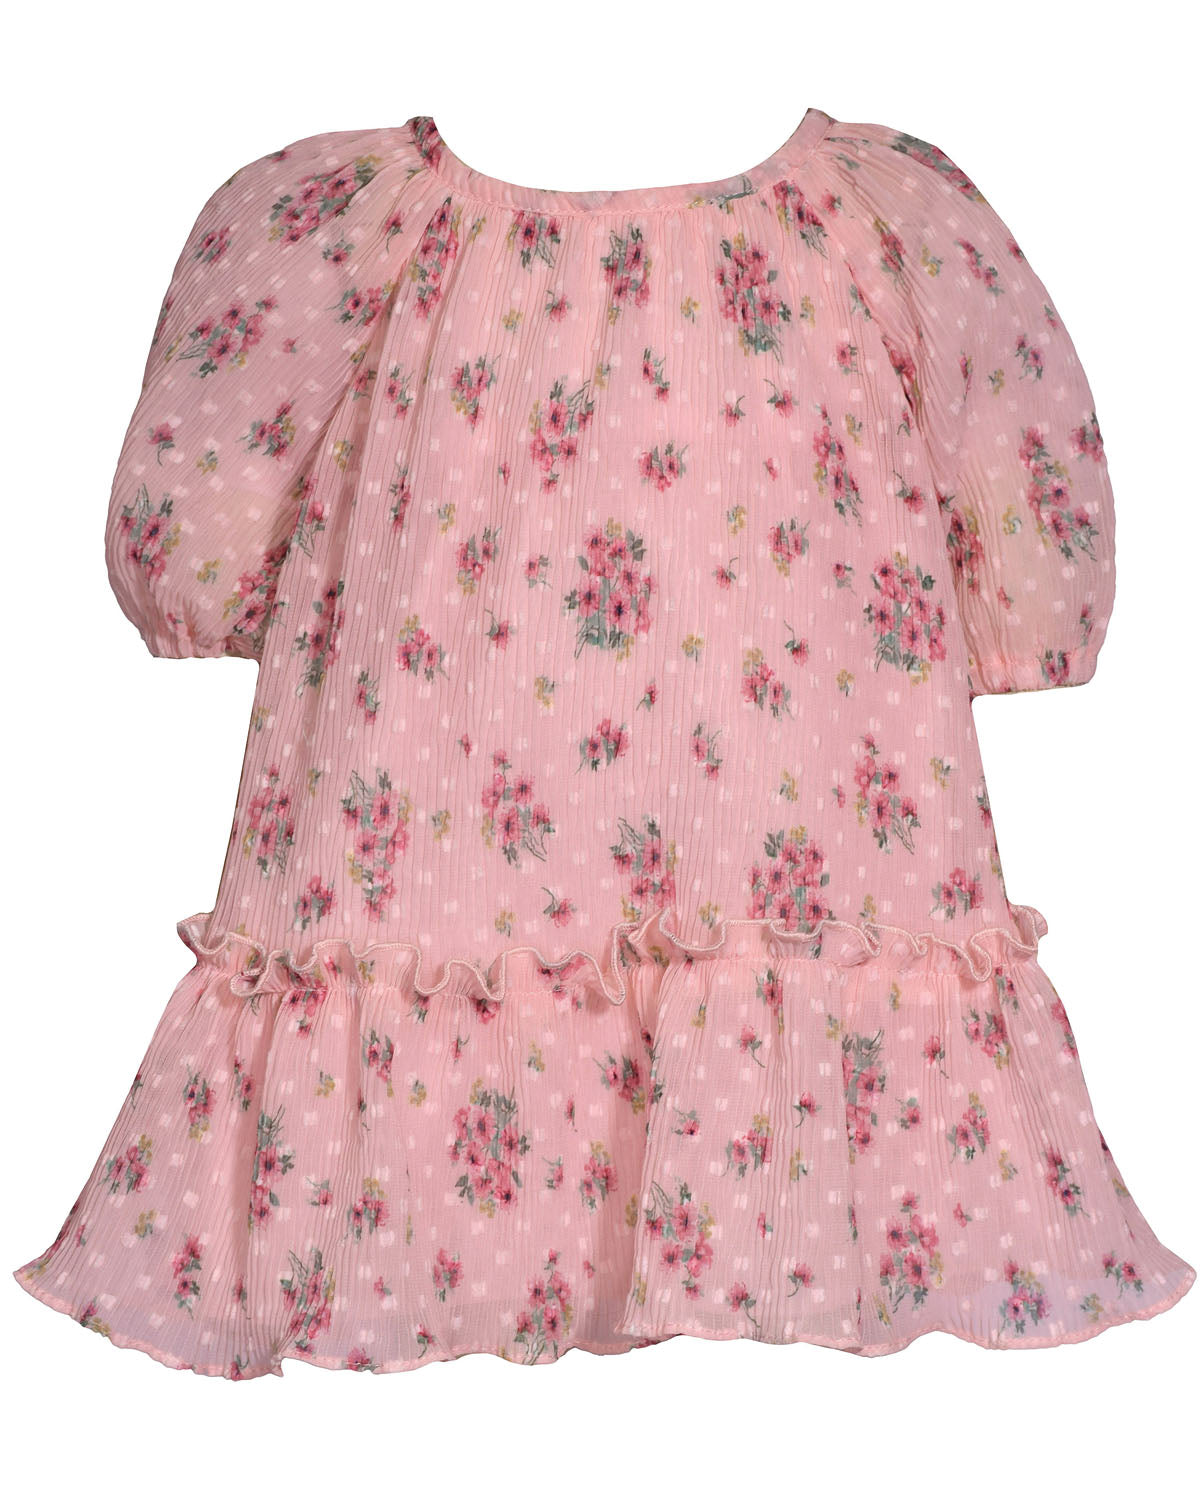 Bonnie Jean Toddler Girl Floral Clip Dot Dress